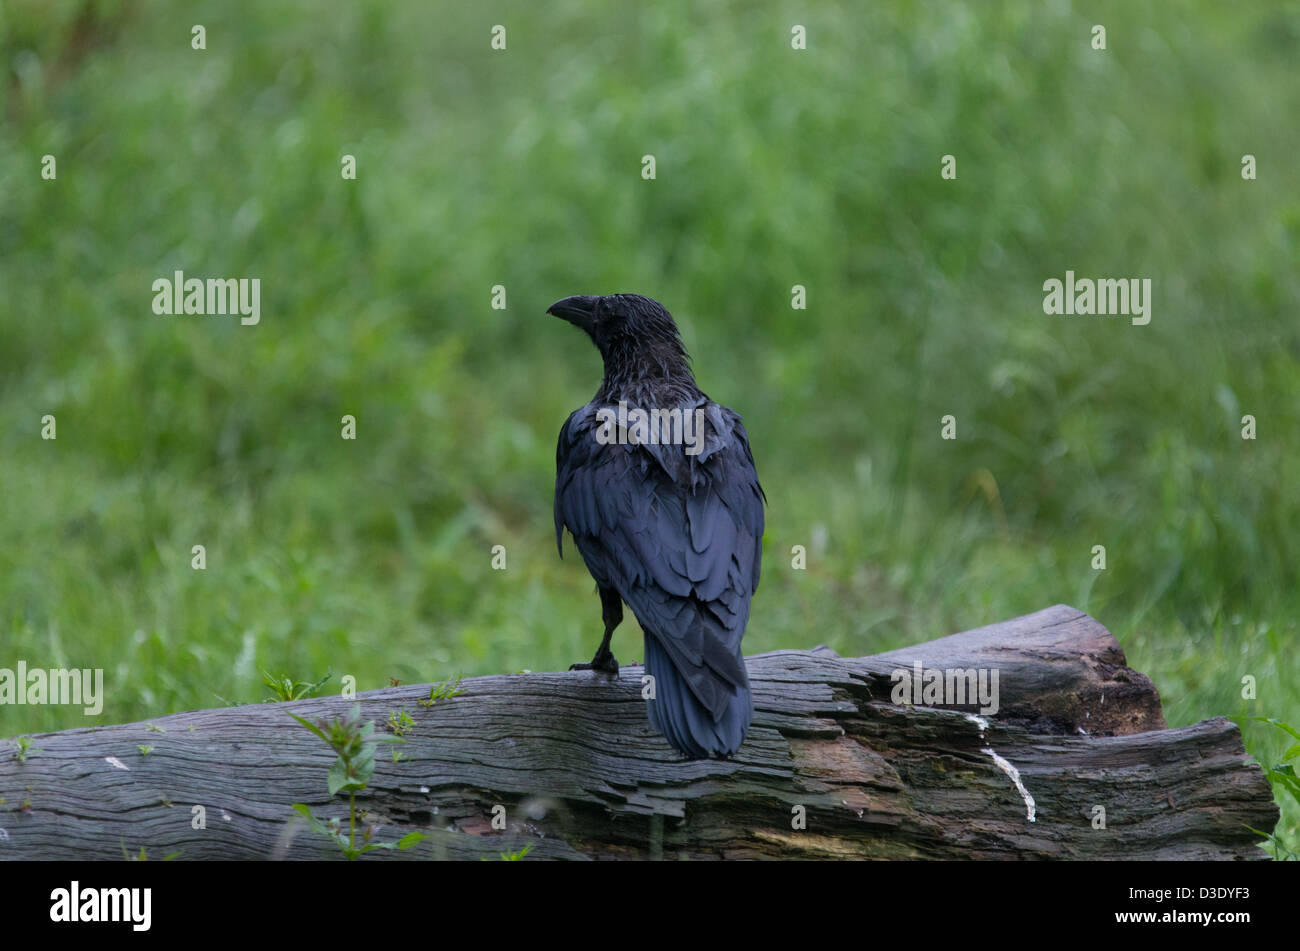 A raven sits on a log Stock Photo